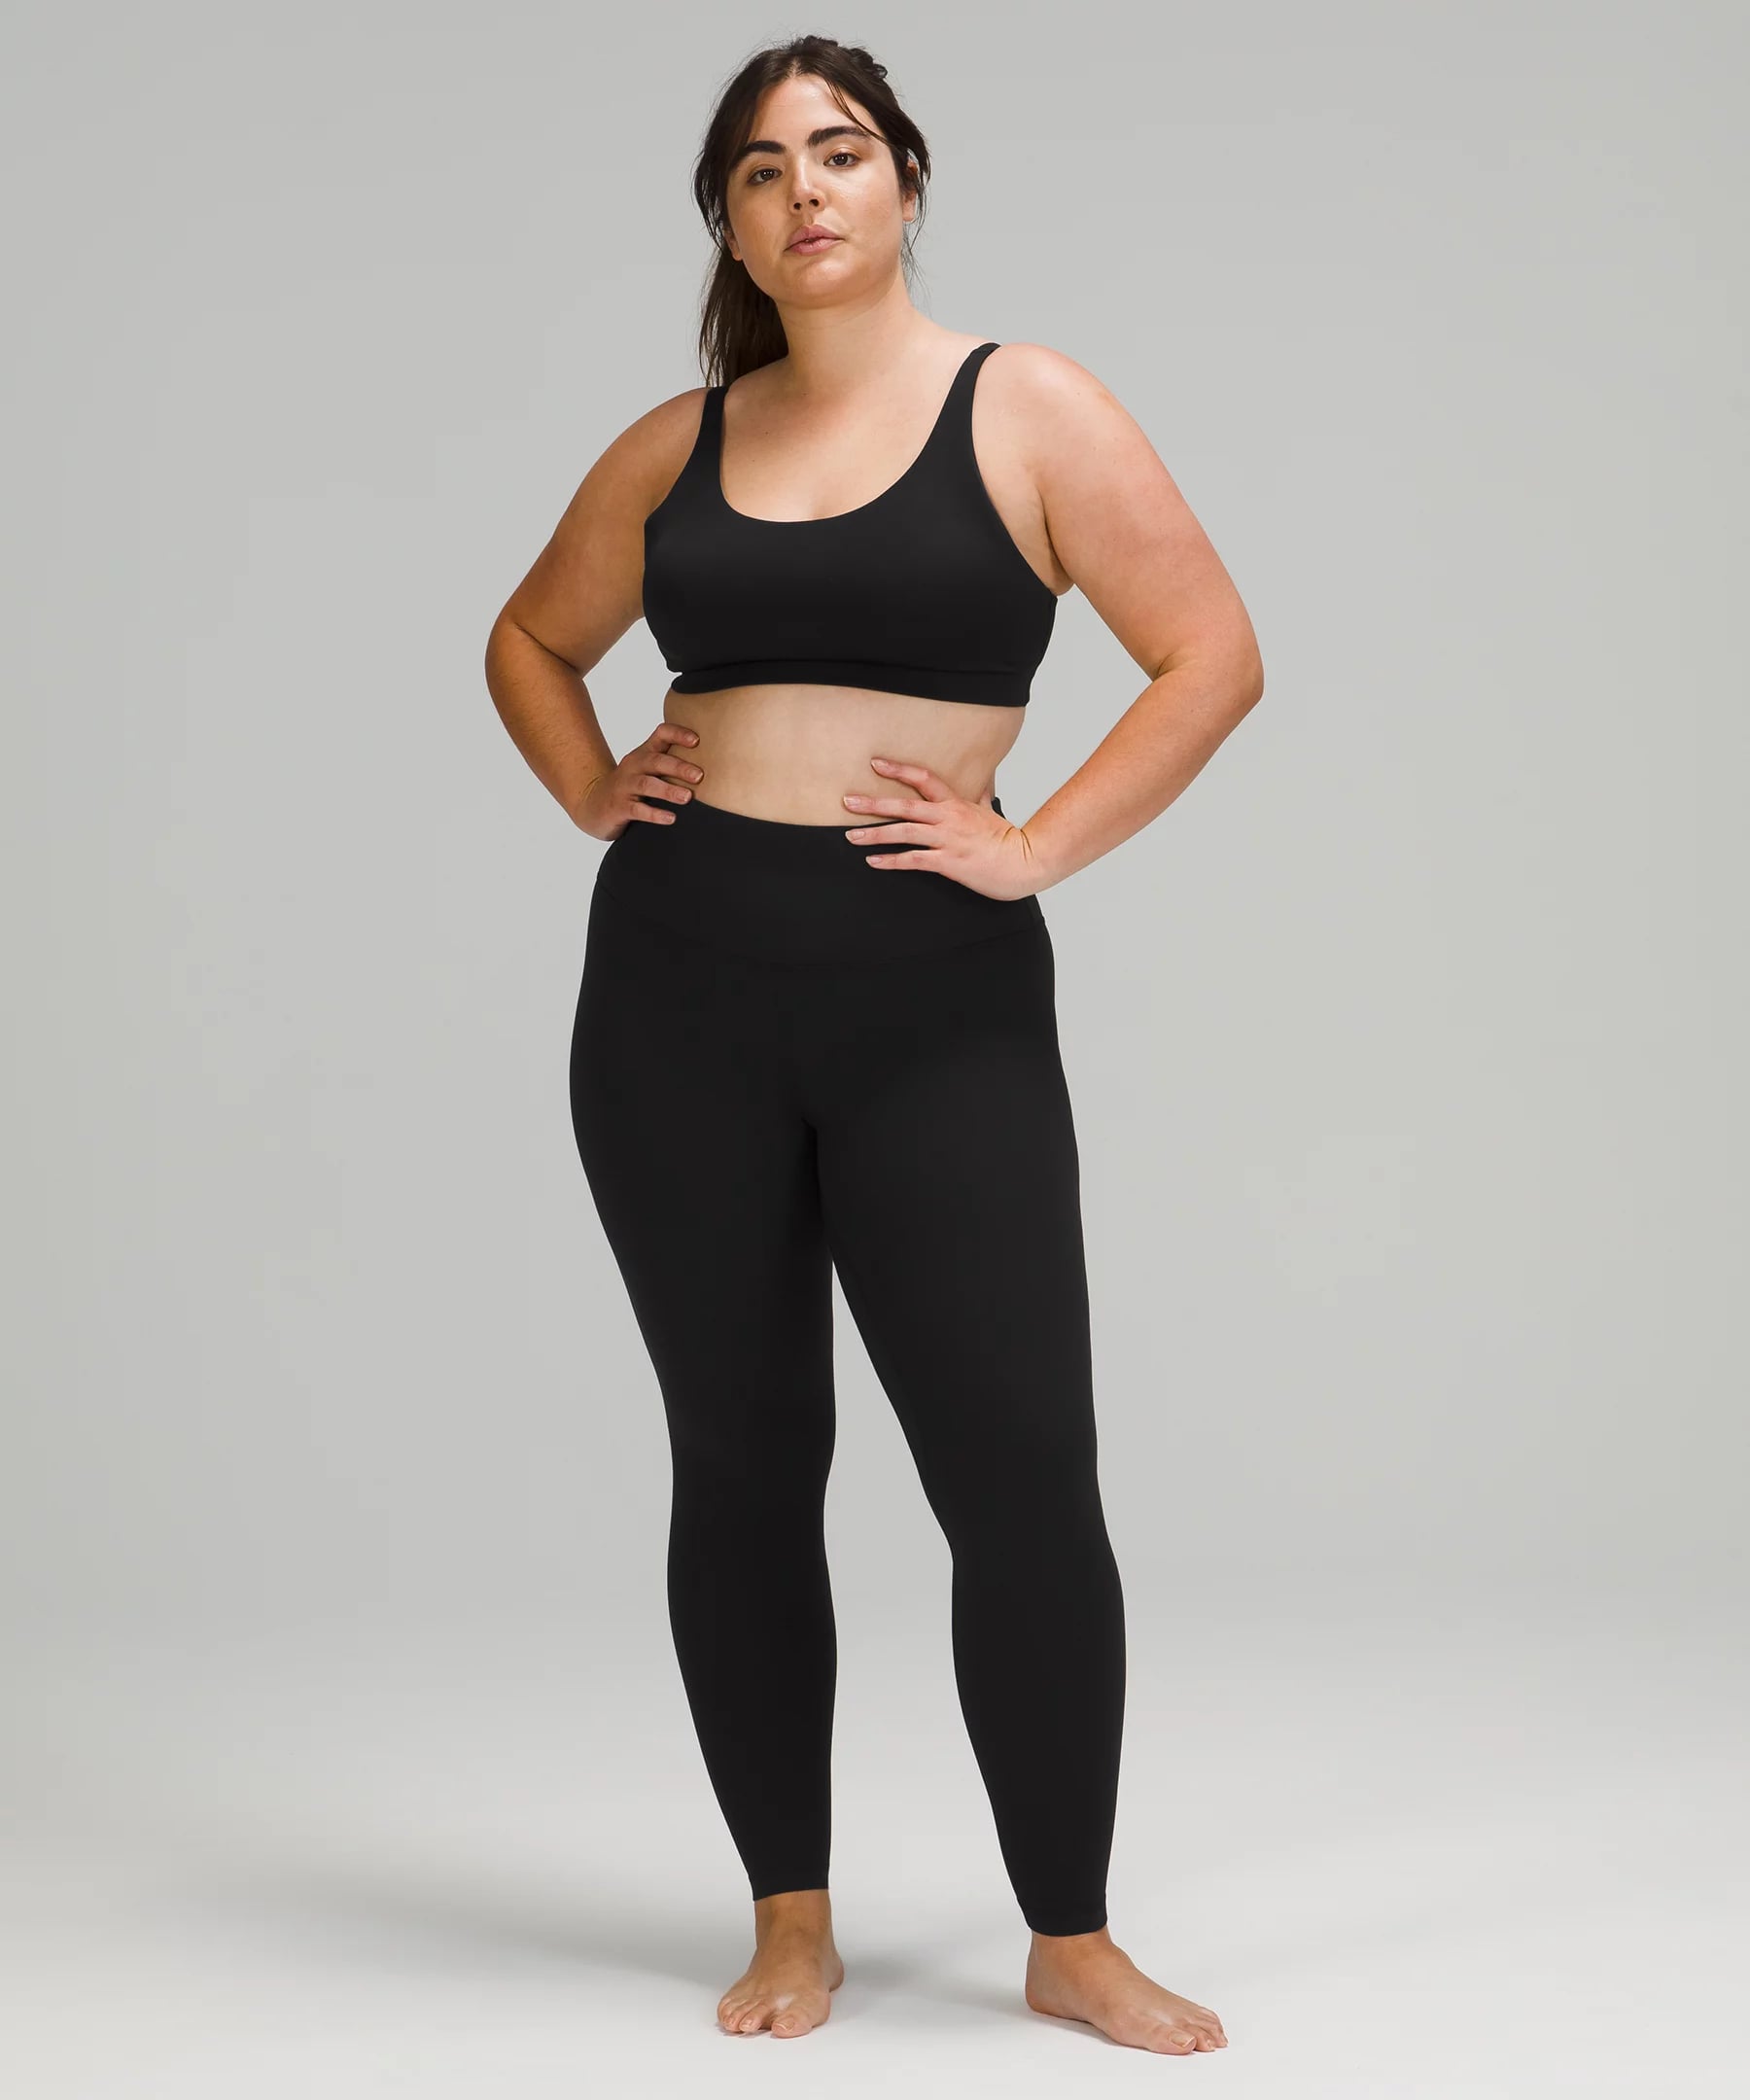 Black Yoga Set For Women W/ Long Sleeves Hoodie Crop Top & Fitted